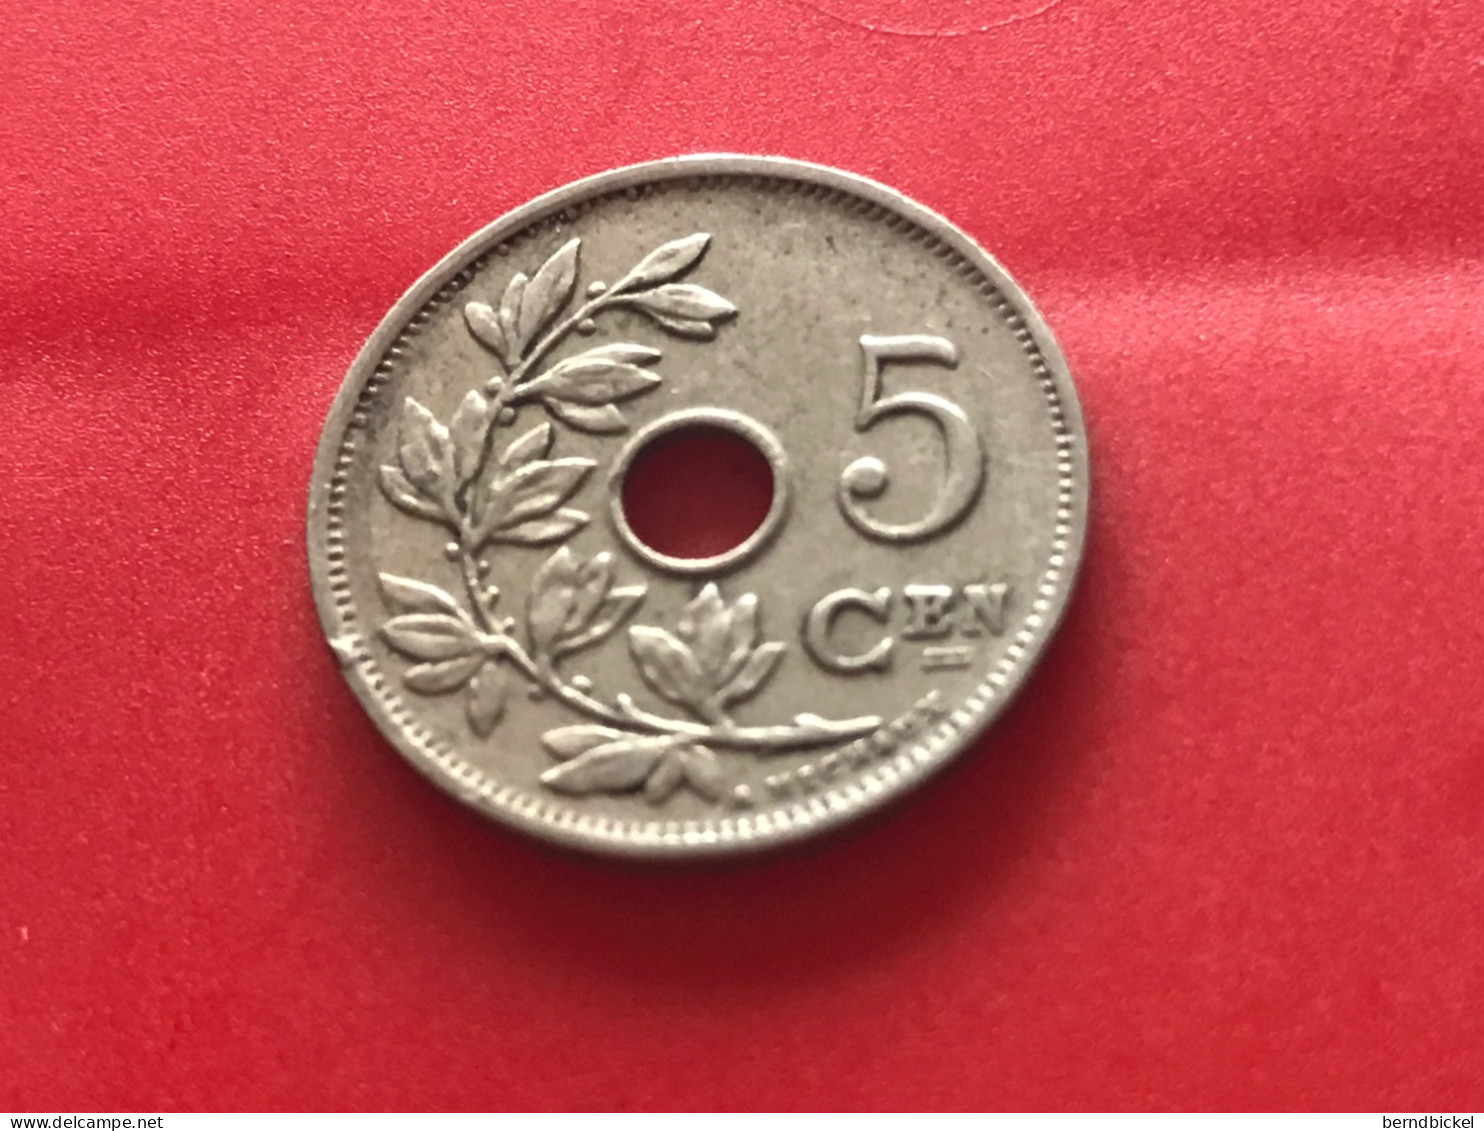 Münze Münzen Umlaufmünze Belgien 5 Centimes 1927 Belgie - 10 Cent